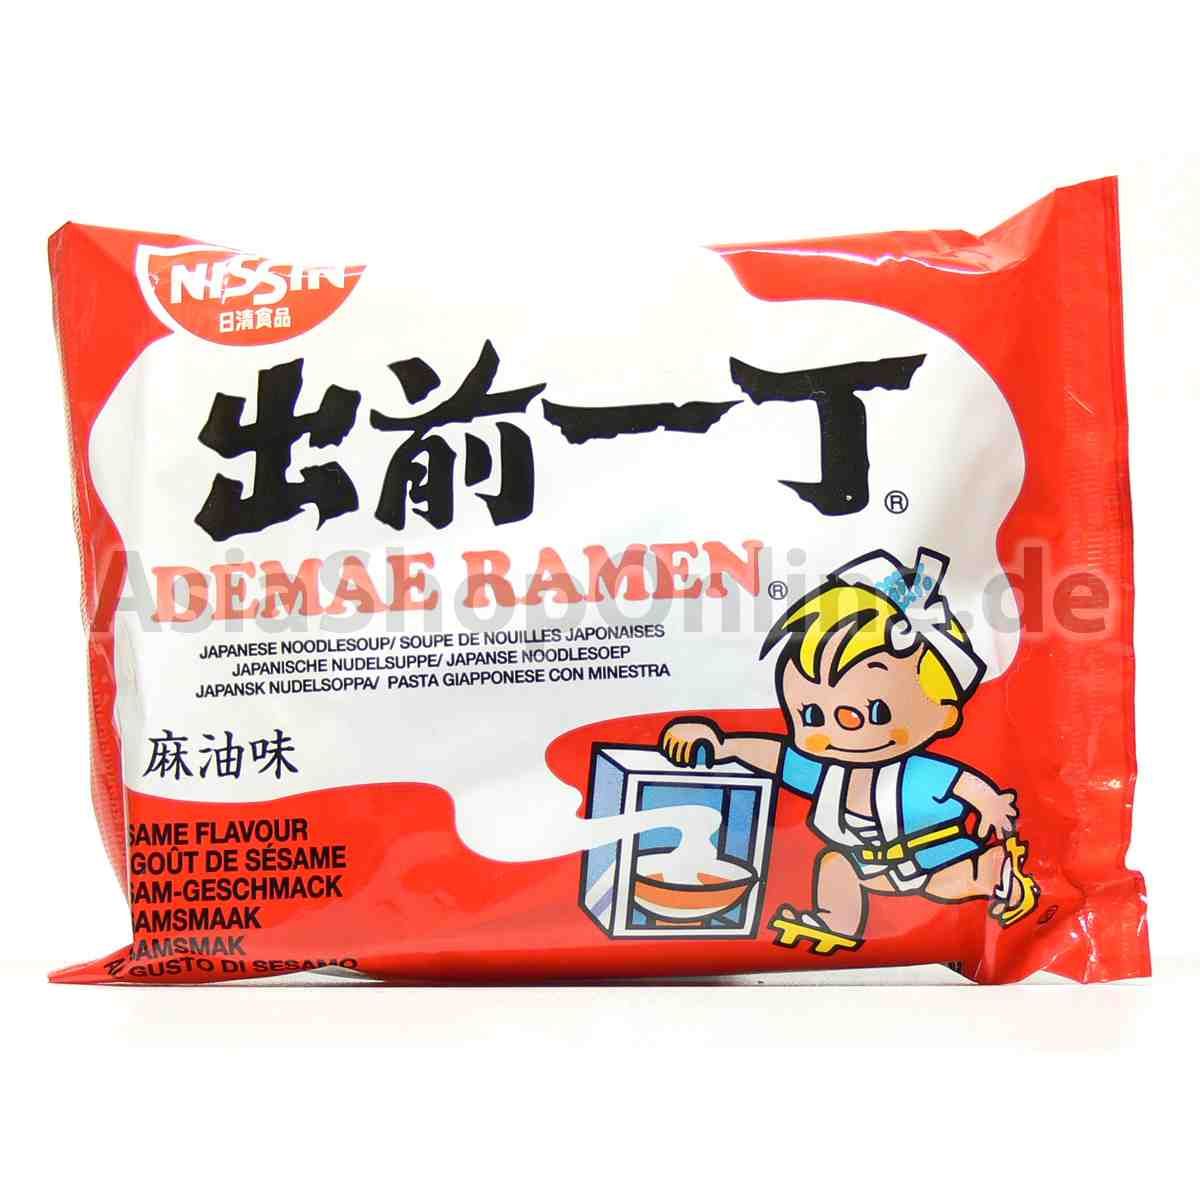 Demae Ramen Sesam - Nissin Foods - 100g